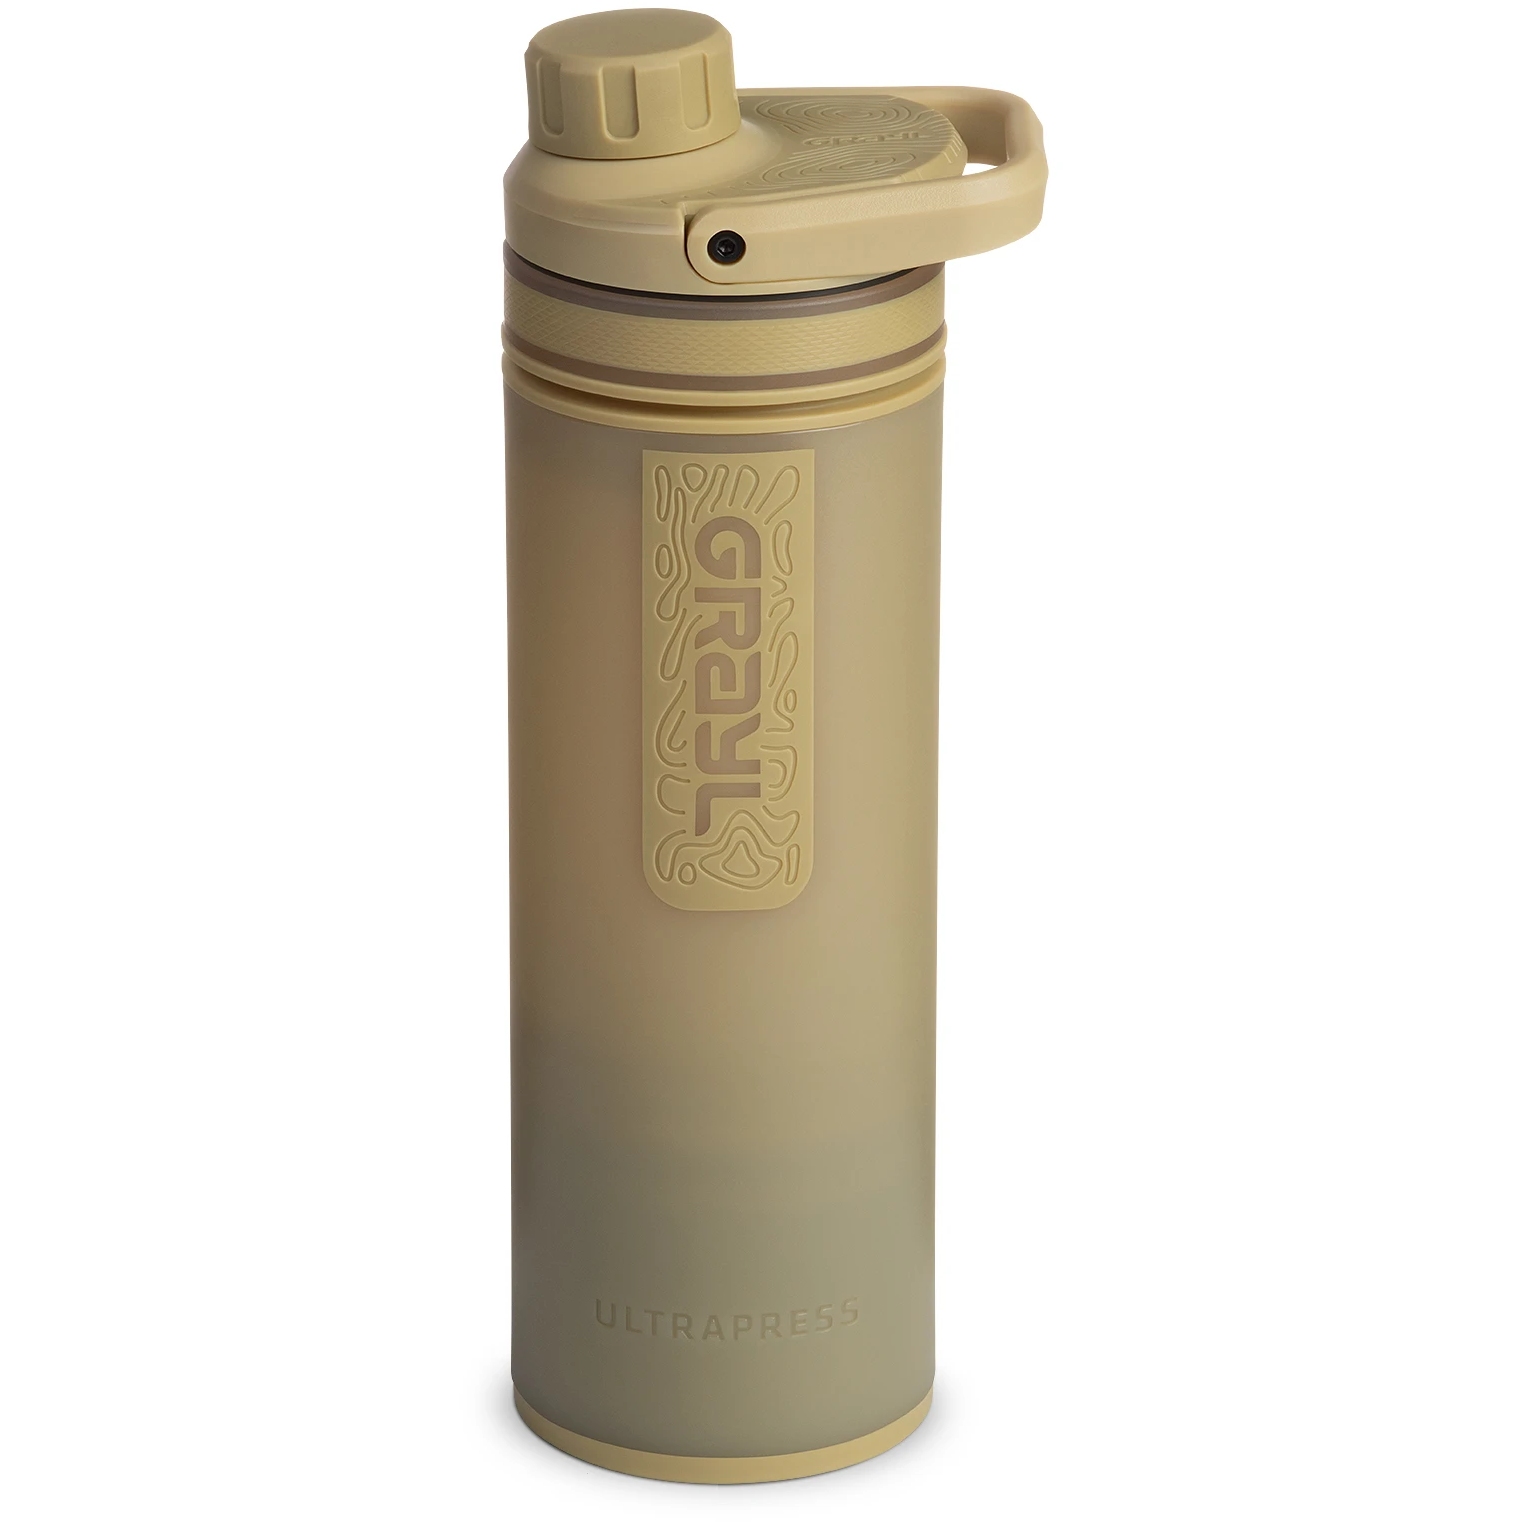 Picture of Grayl UltraPress Purifier Bottle with Water Filter - 500ml - Desert Tan